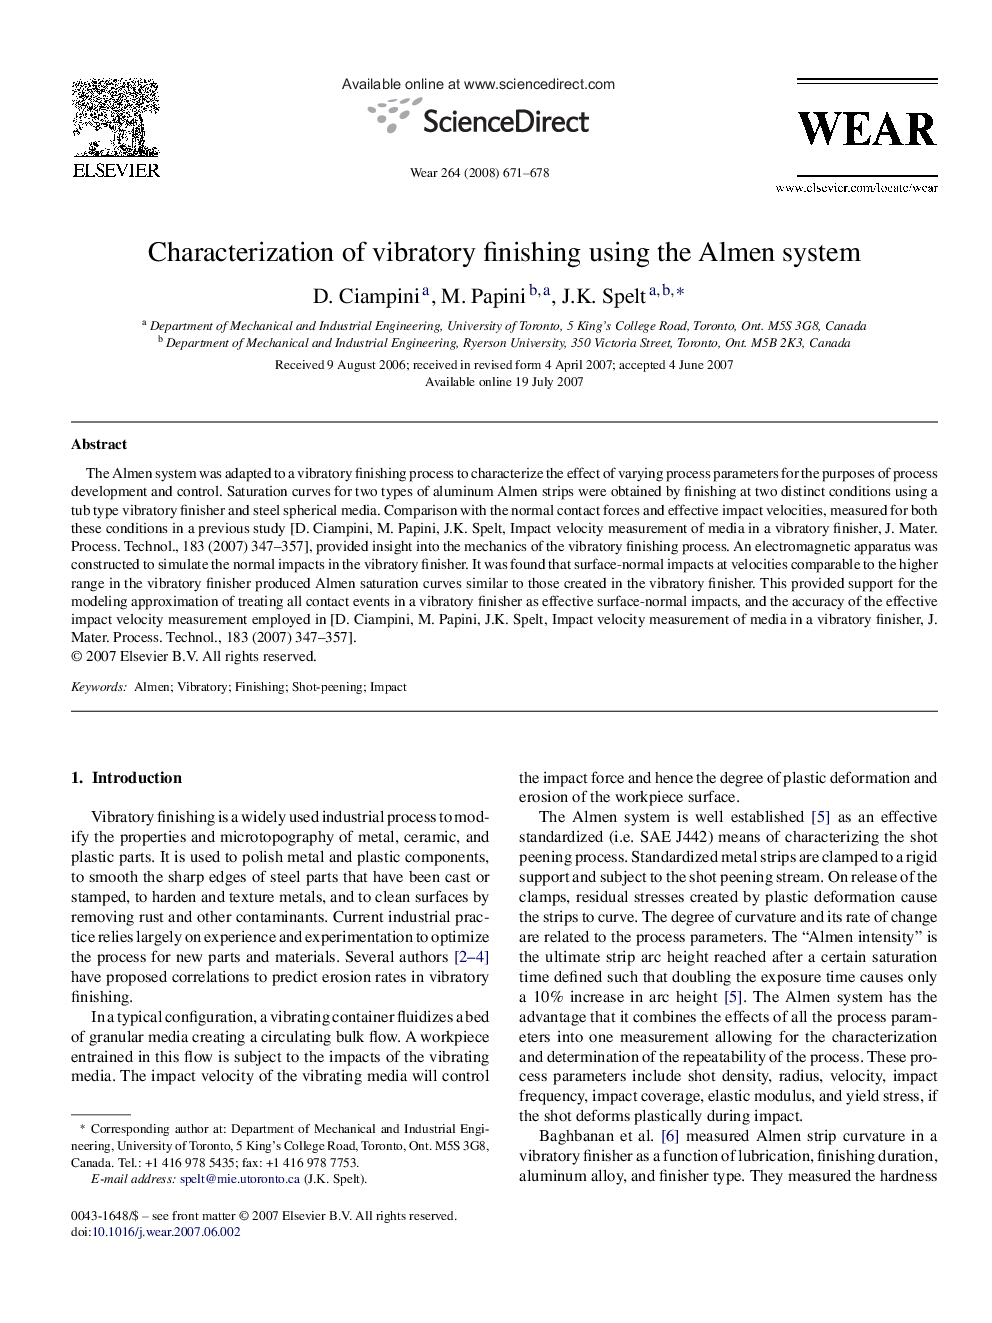 Characterization of vibratory finishing using the Almen system